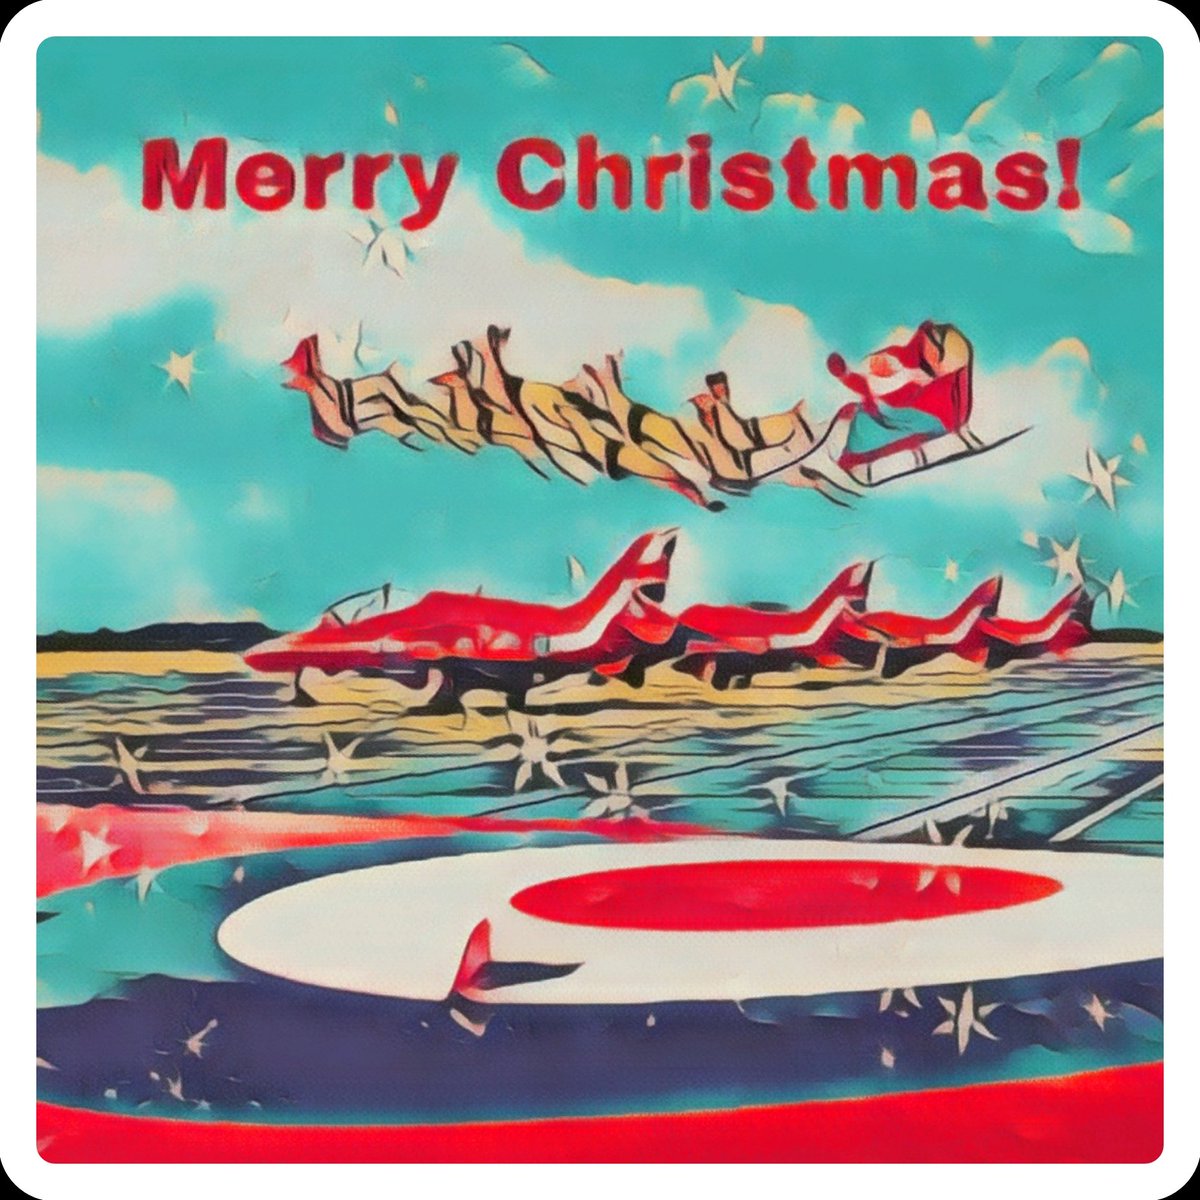 Merry Christmas! 
#merrychristmas #redarrows #stem #engineering #planespotting #aviationlovers  #aviationdaily #christmas #hawk #santa #xmas #ukmfts #avporn #avgeek #SeasonsGreetings